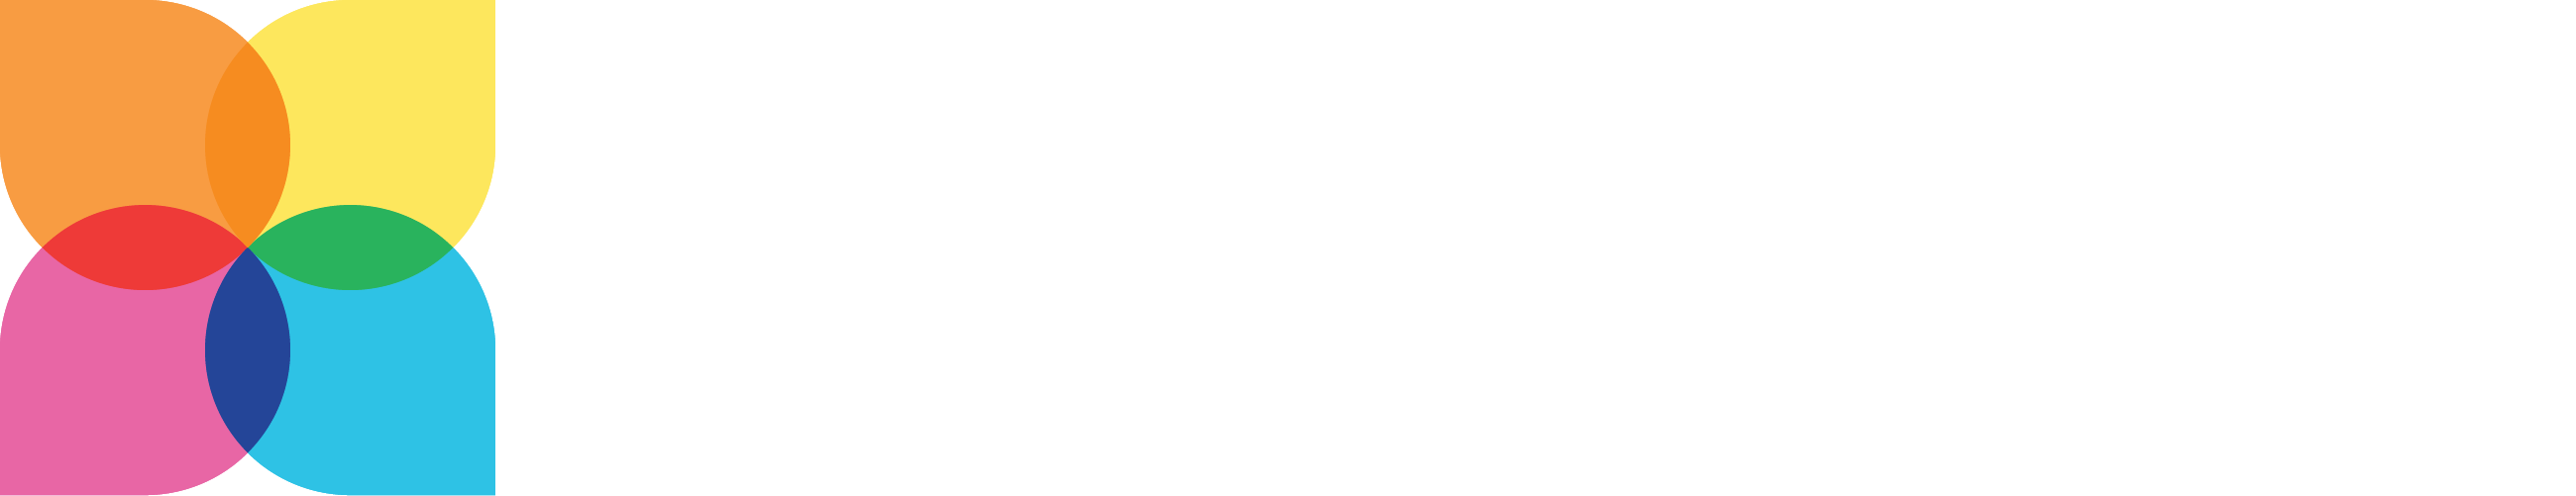 pixlee-logo